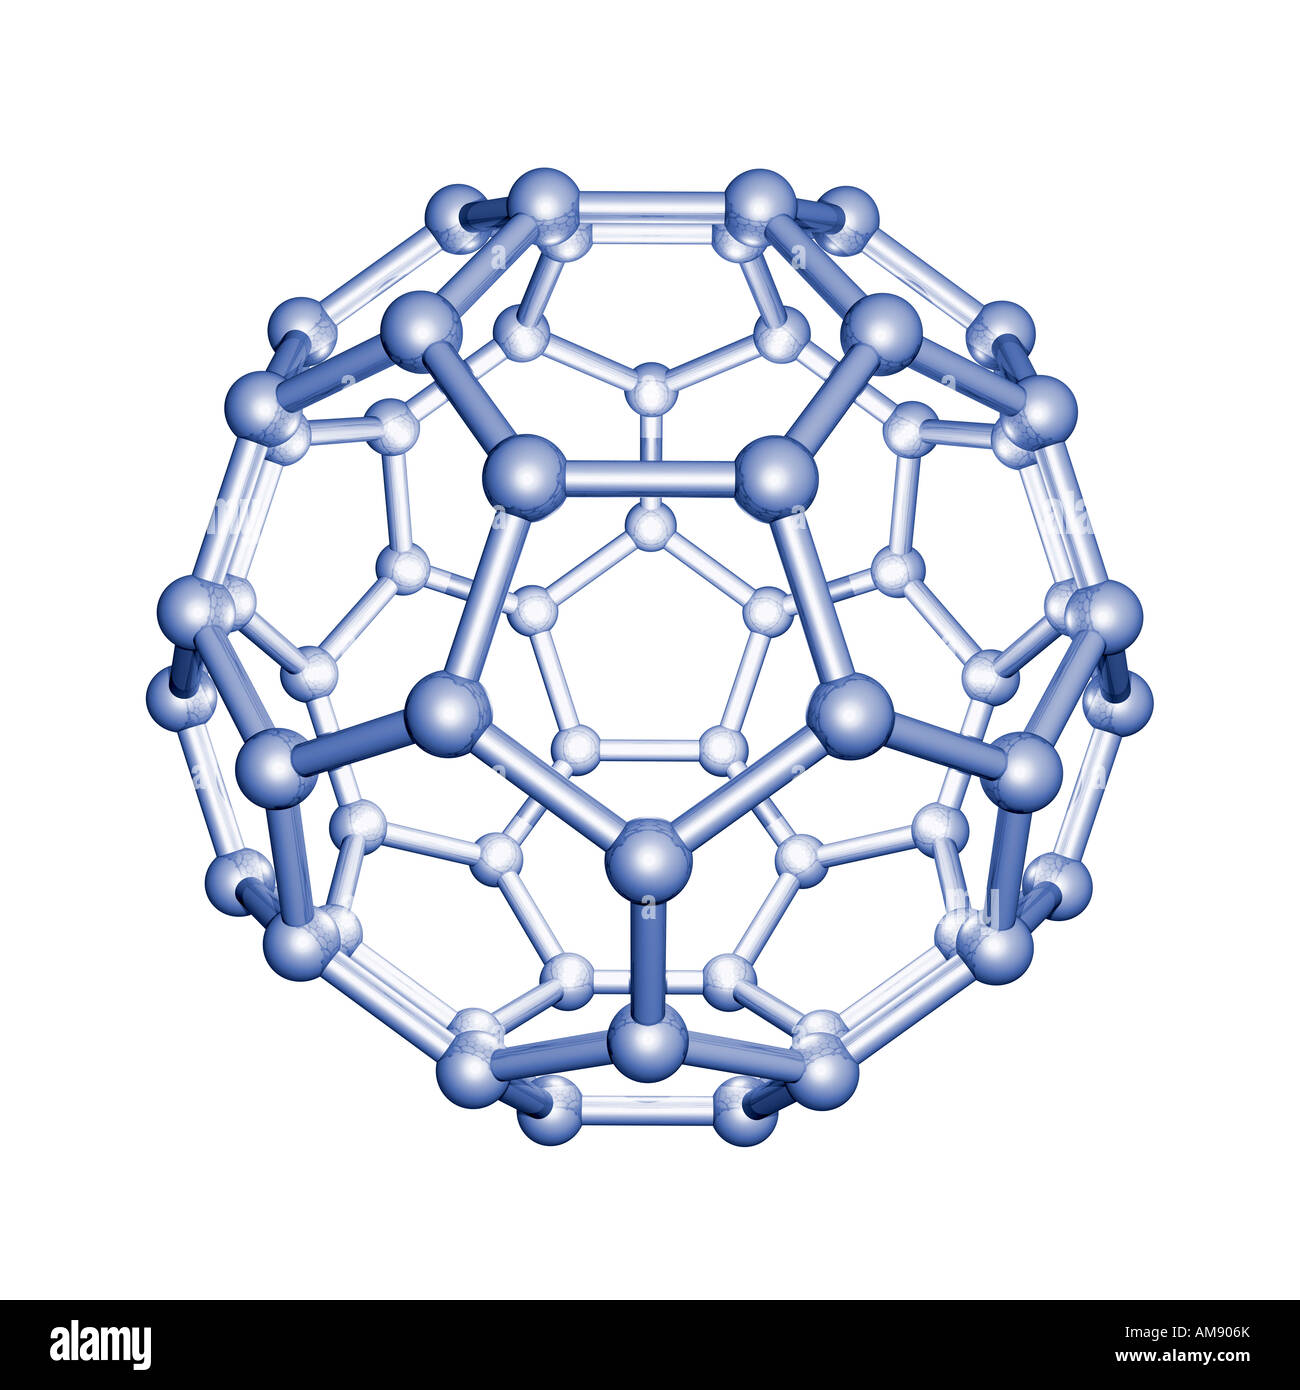 3D Modell eines Buckyball (Kohlenstoff-Moleküle). Stockfoto